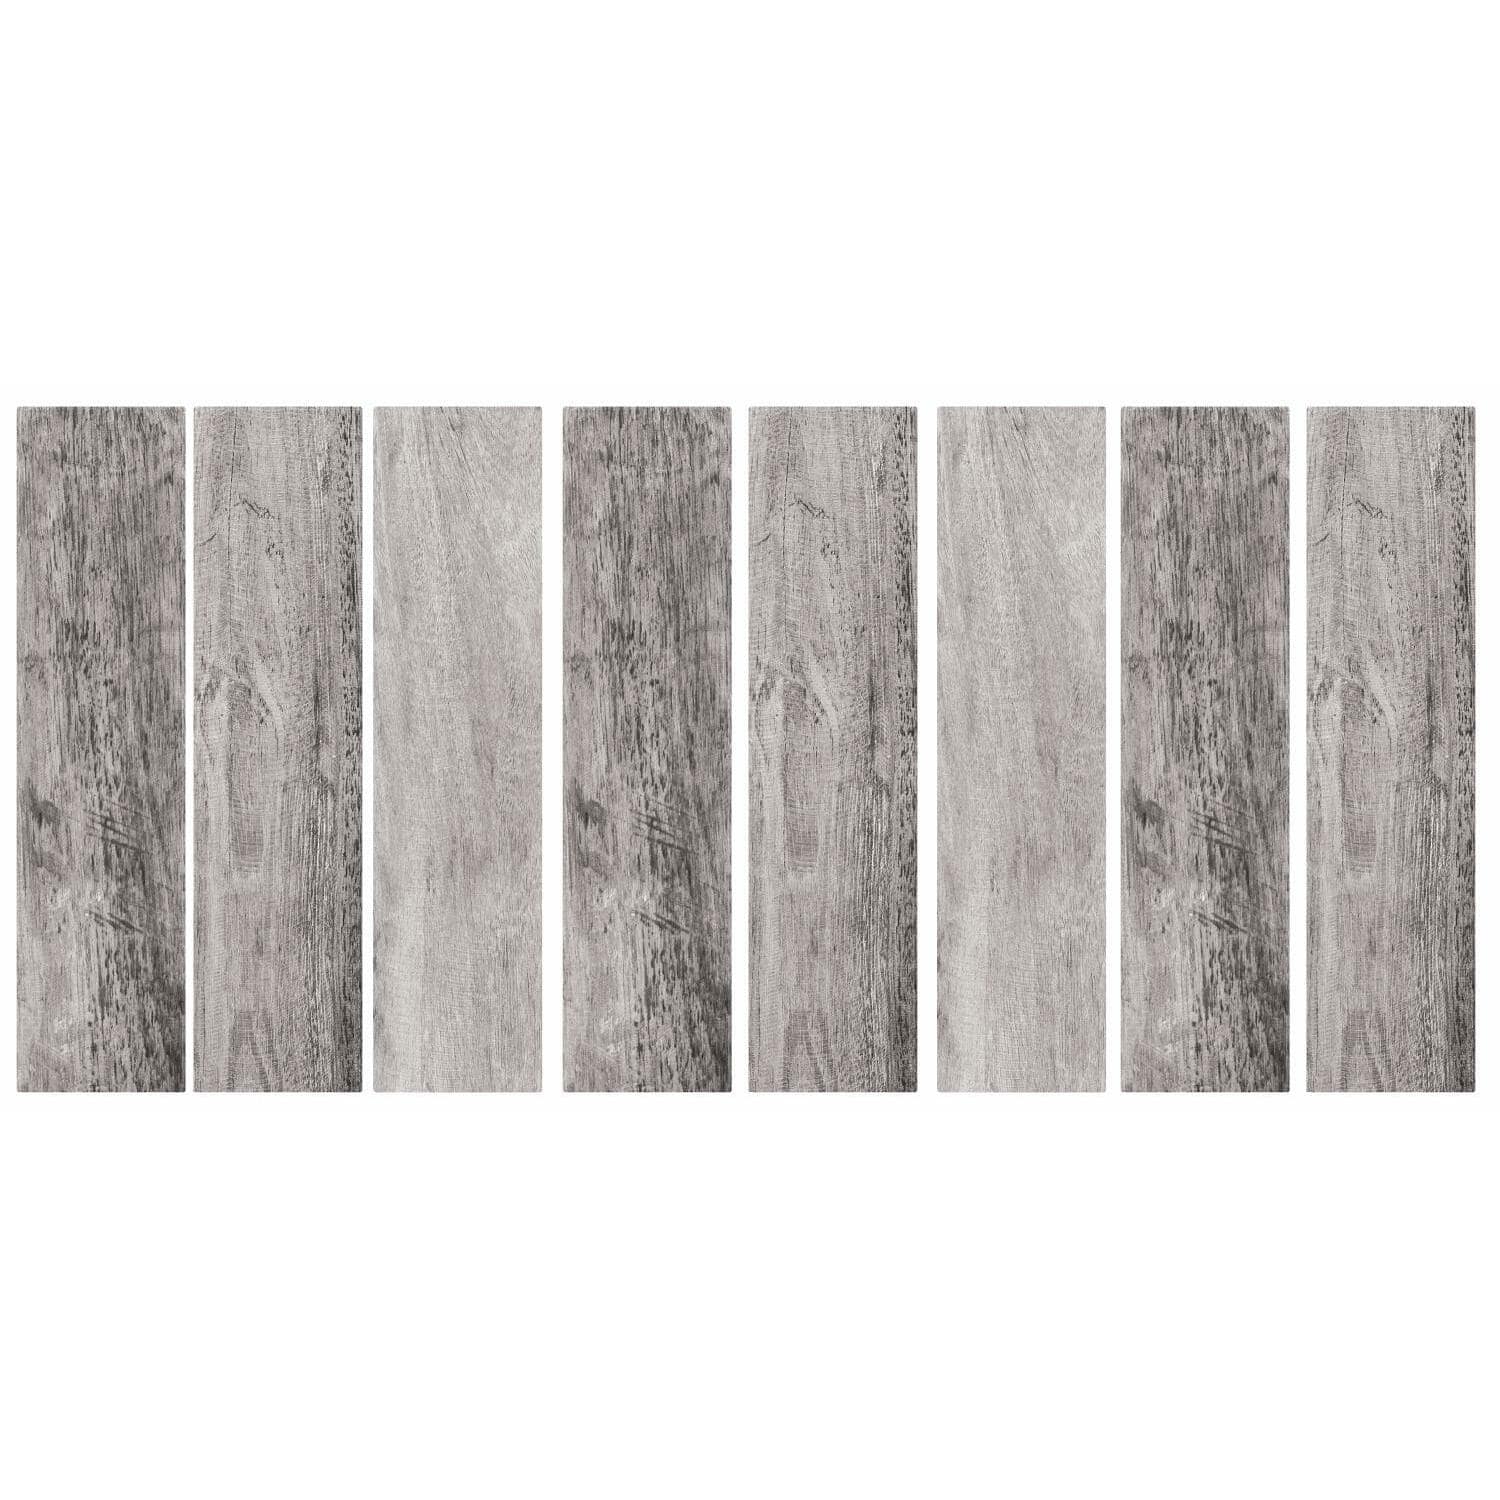 RoomMates Gray Barn Wood Plank Peel &#x26; Stick Decals